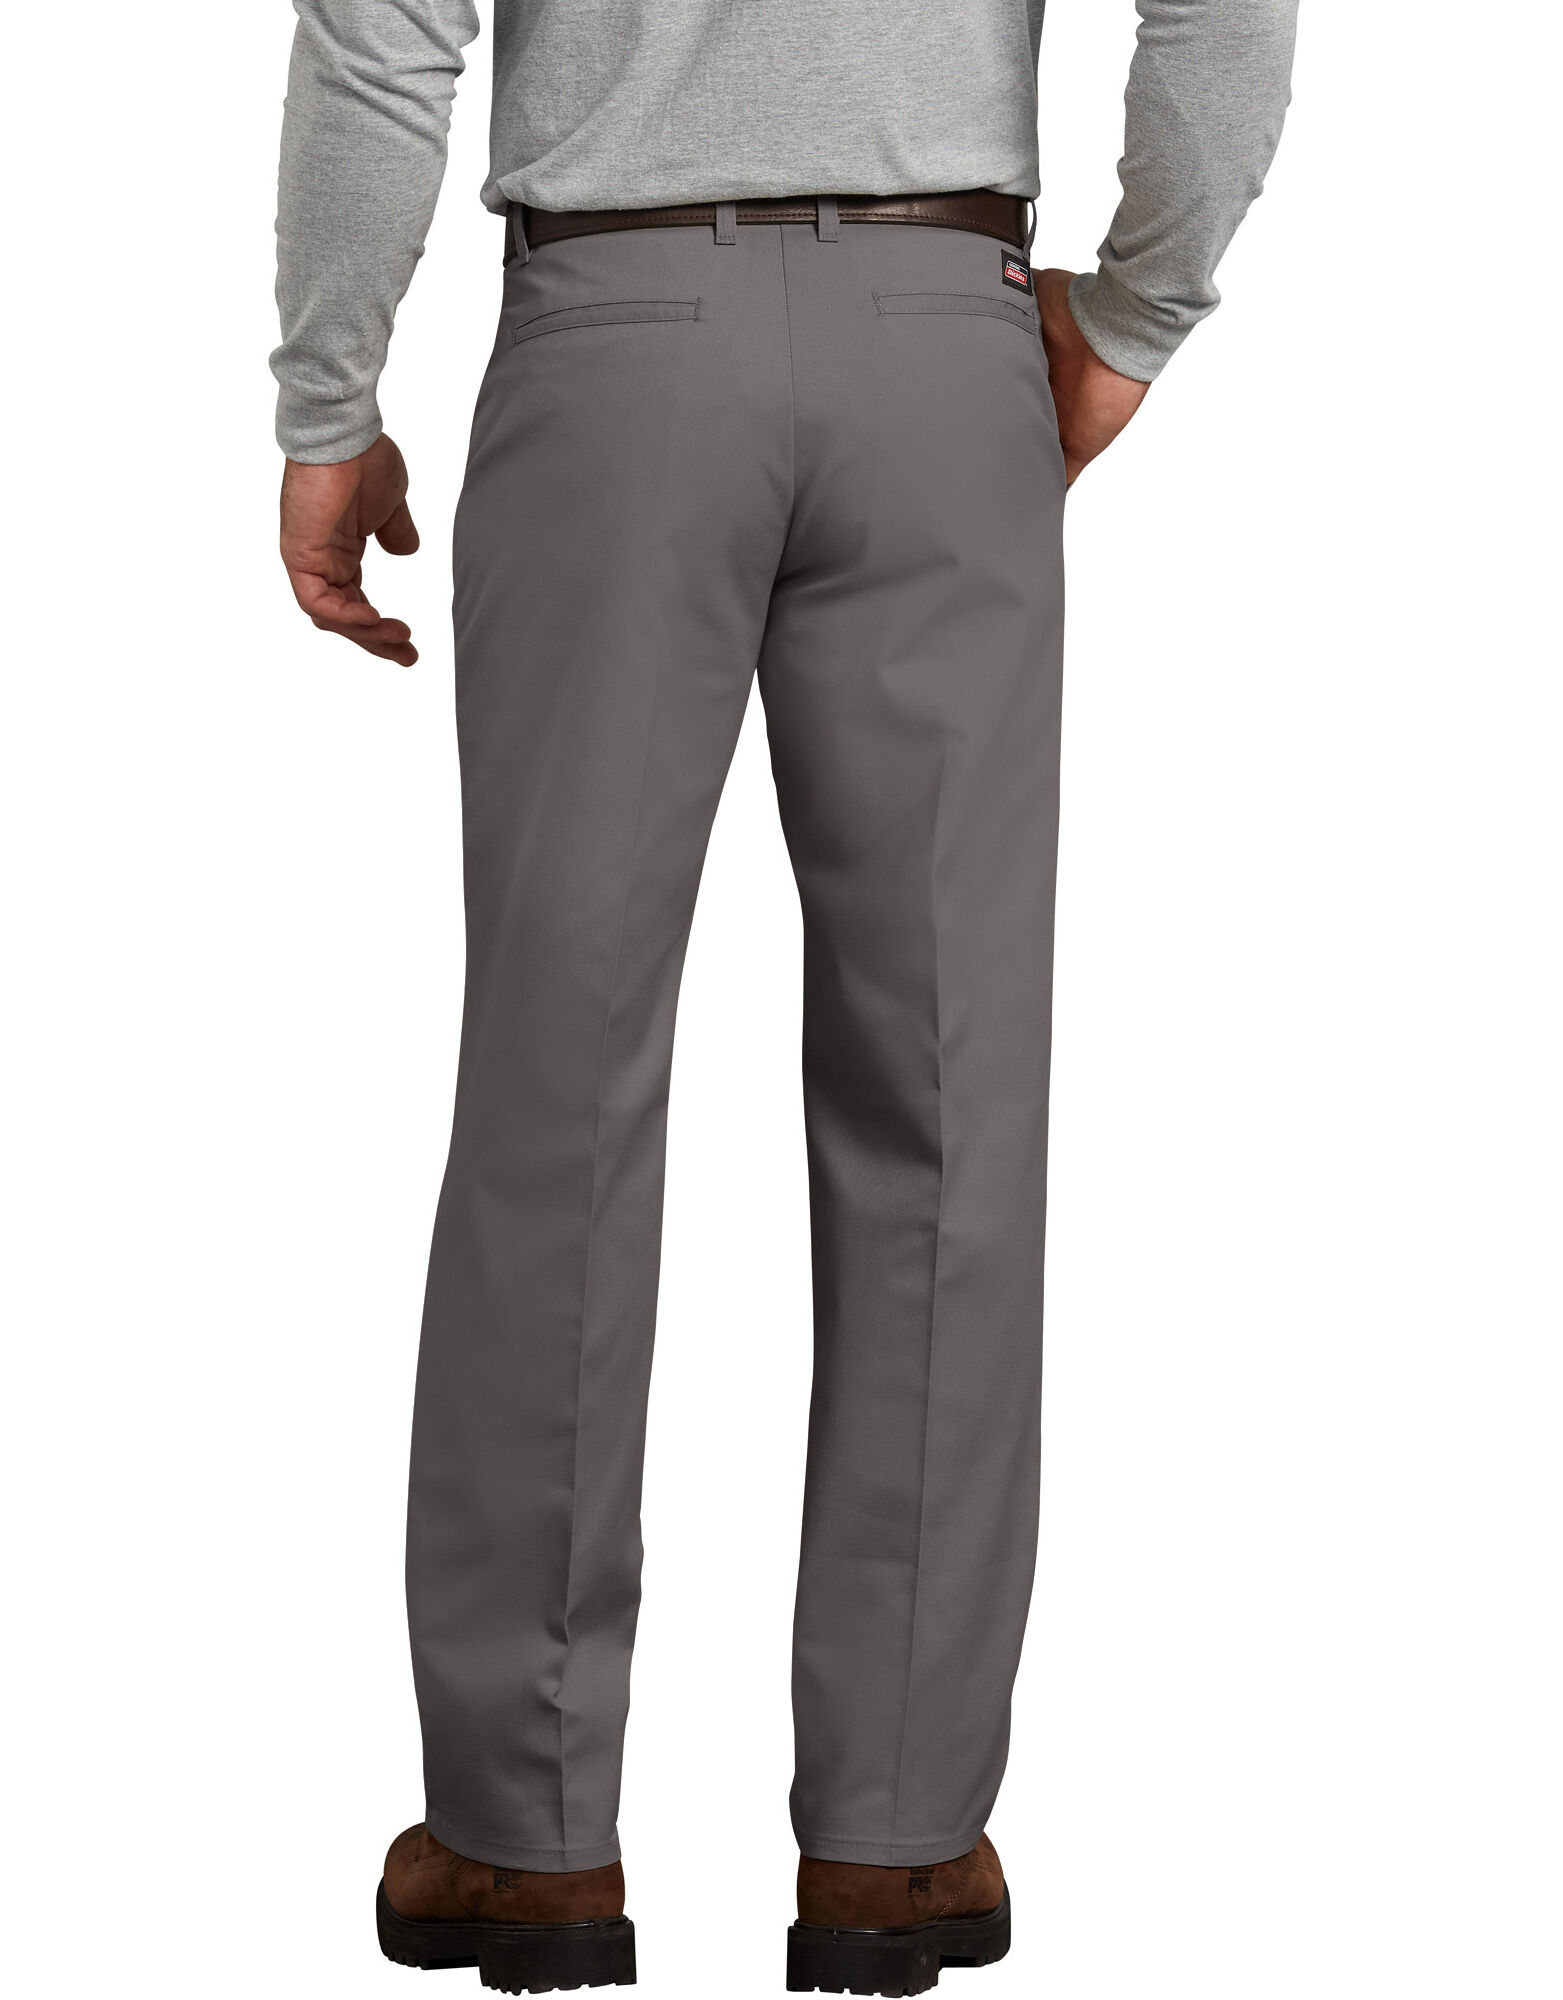 Genuine Dickies Flat Front Flex Pants Gravel Gray | Dickies